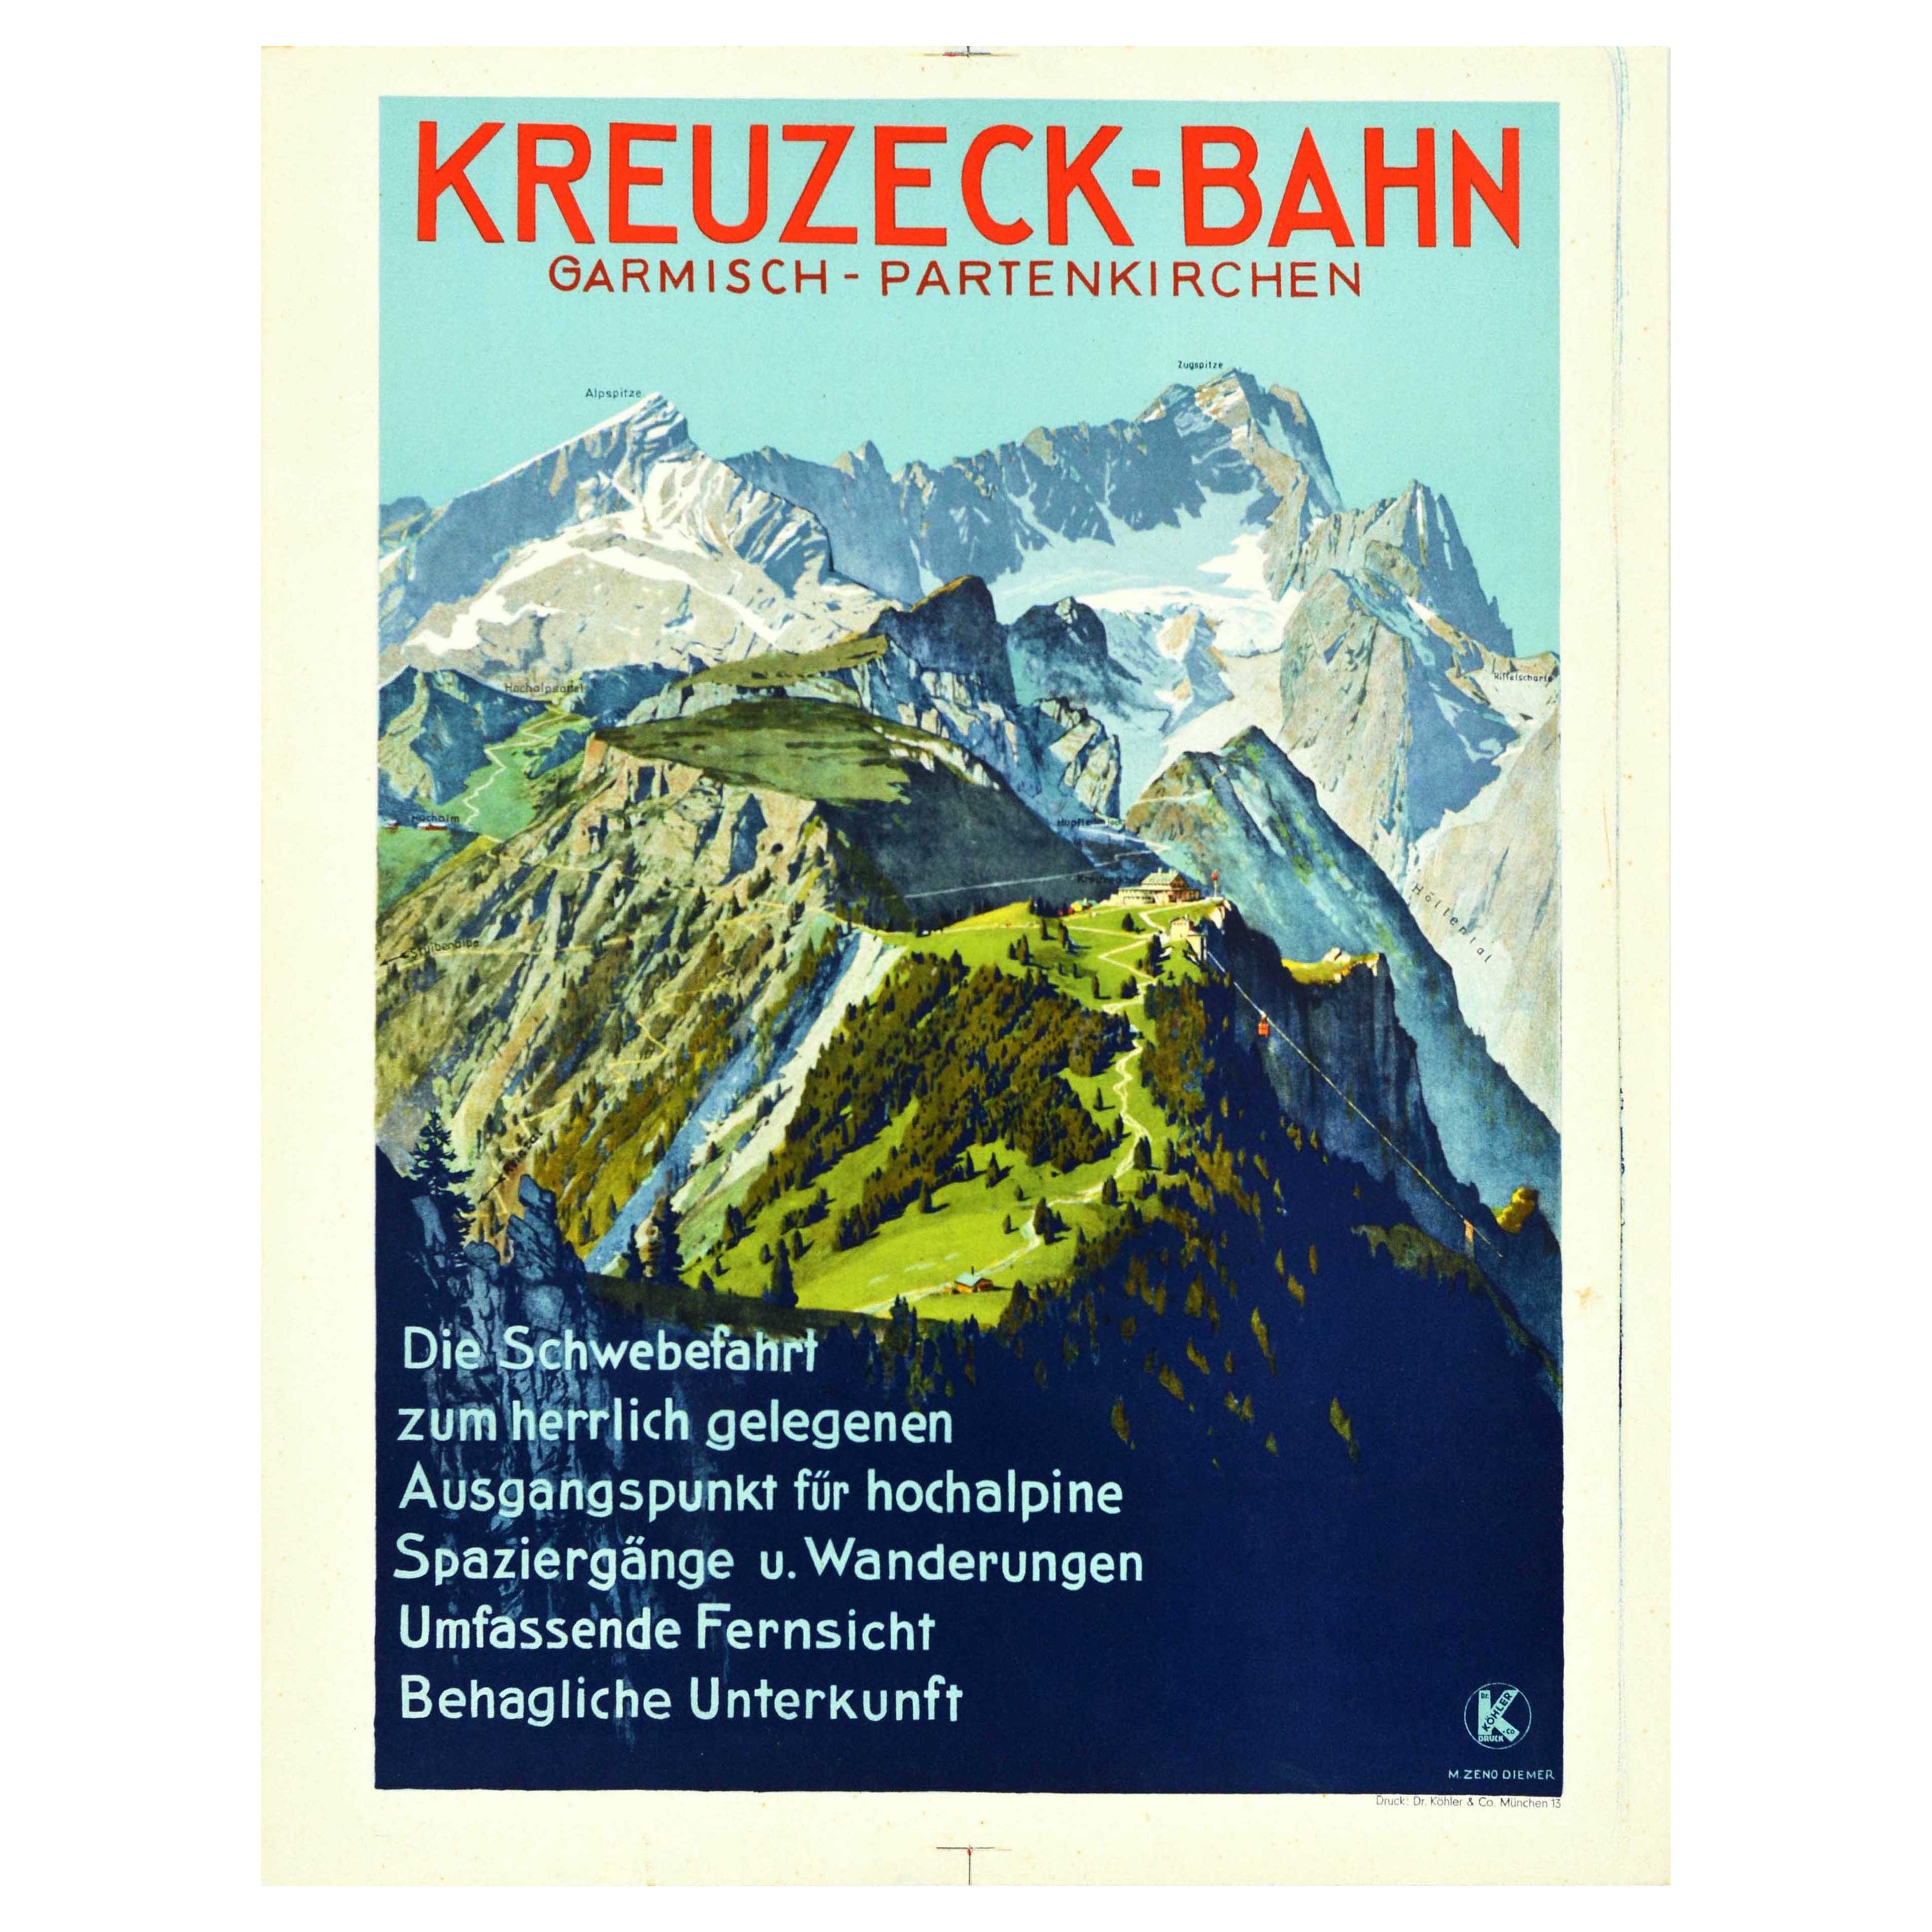 Original Vintage Railway Travel Poster Kreuzeck Bahn Garmisch Partenkirchen Car